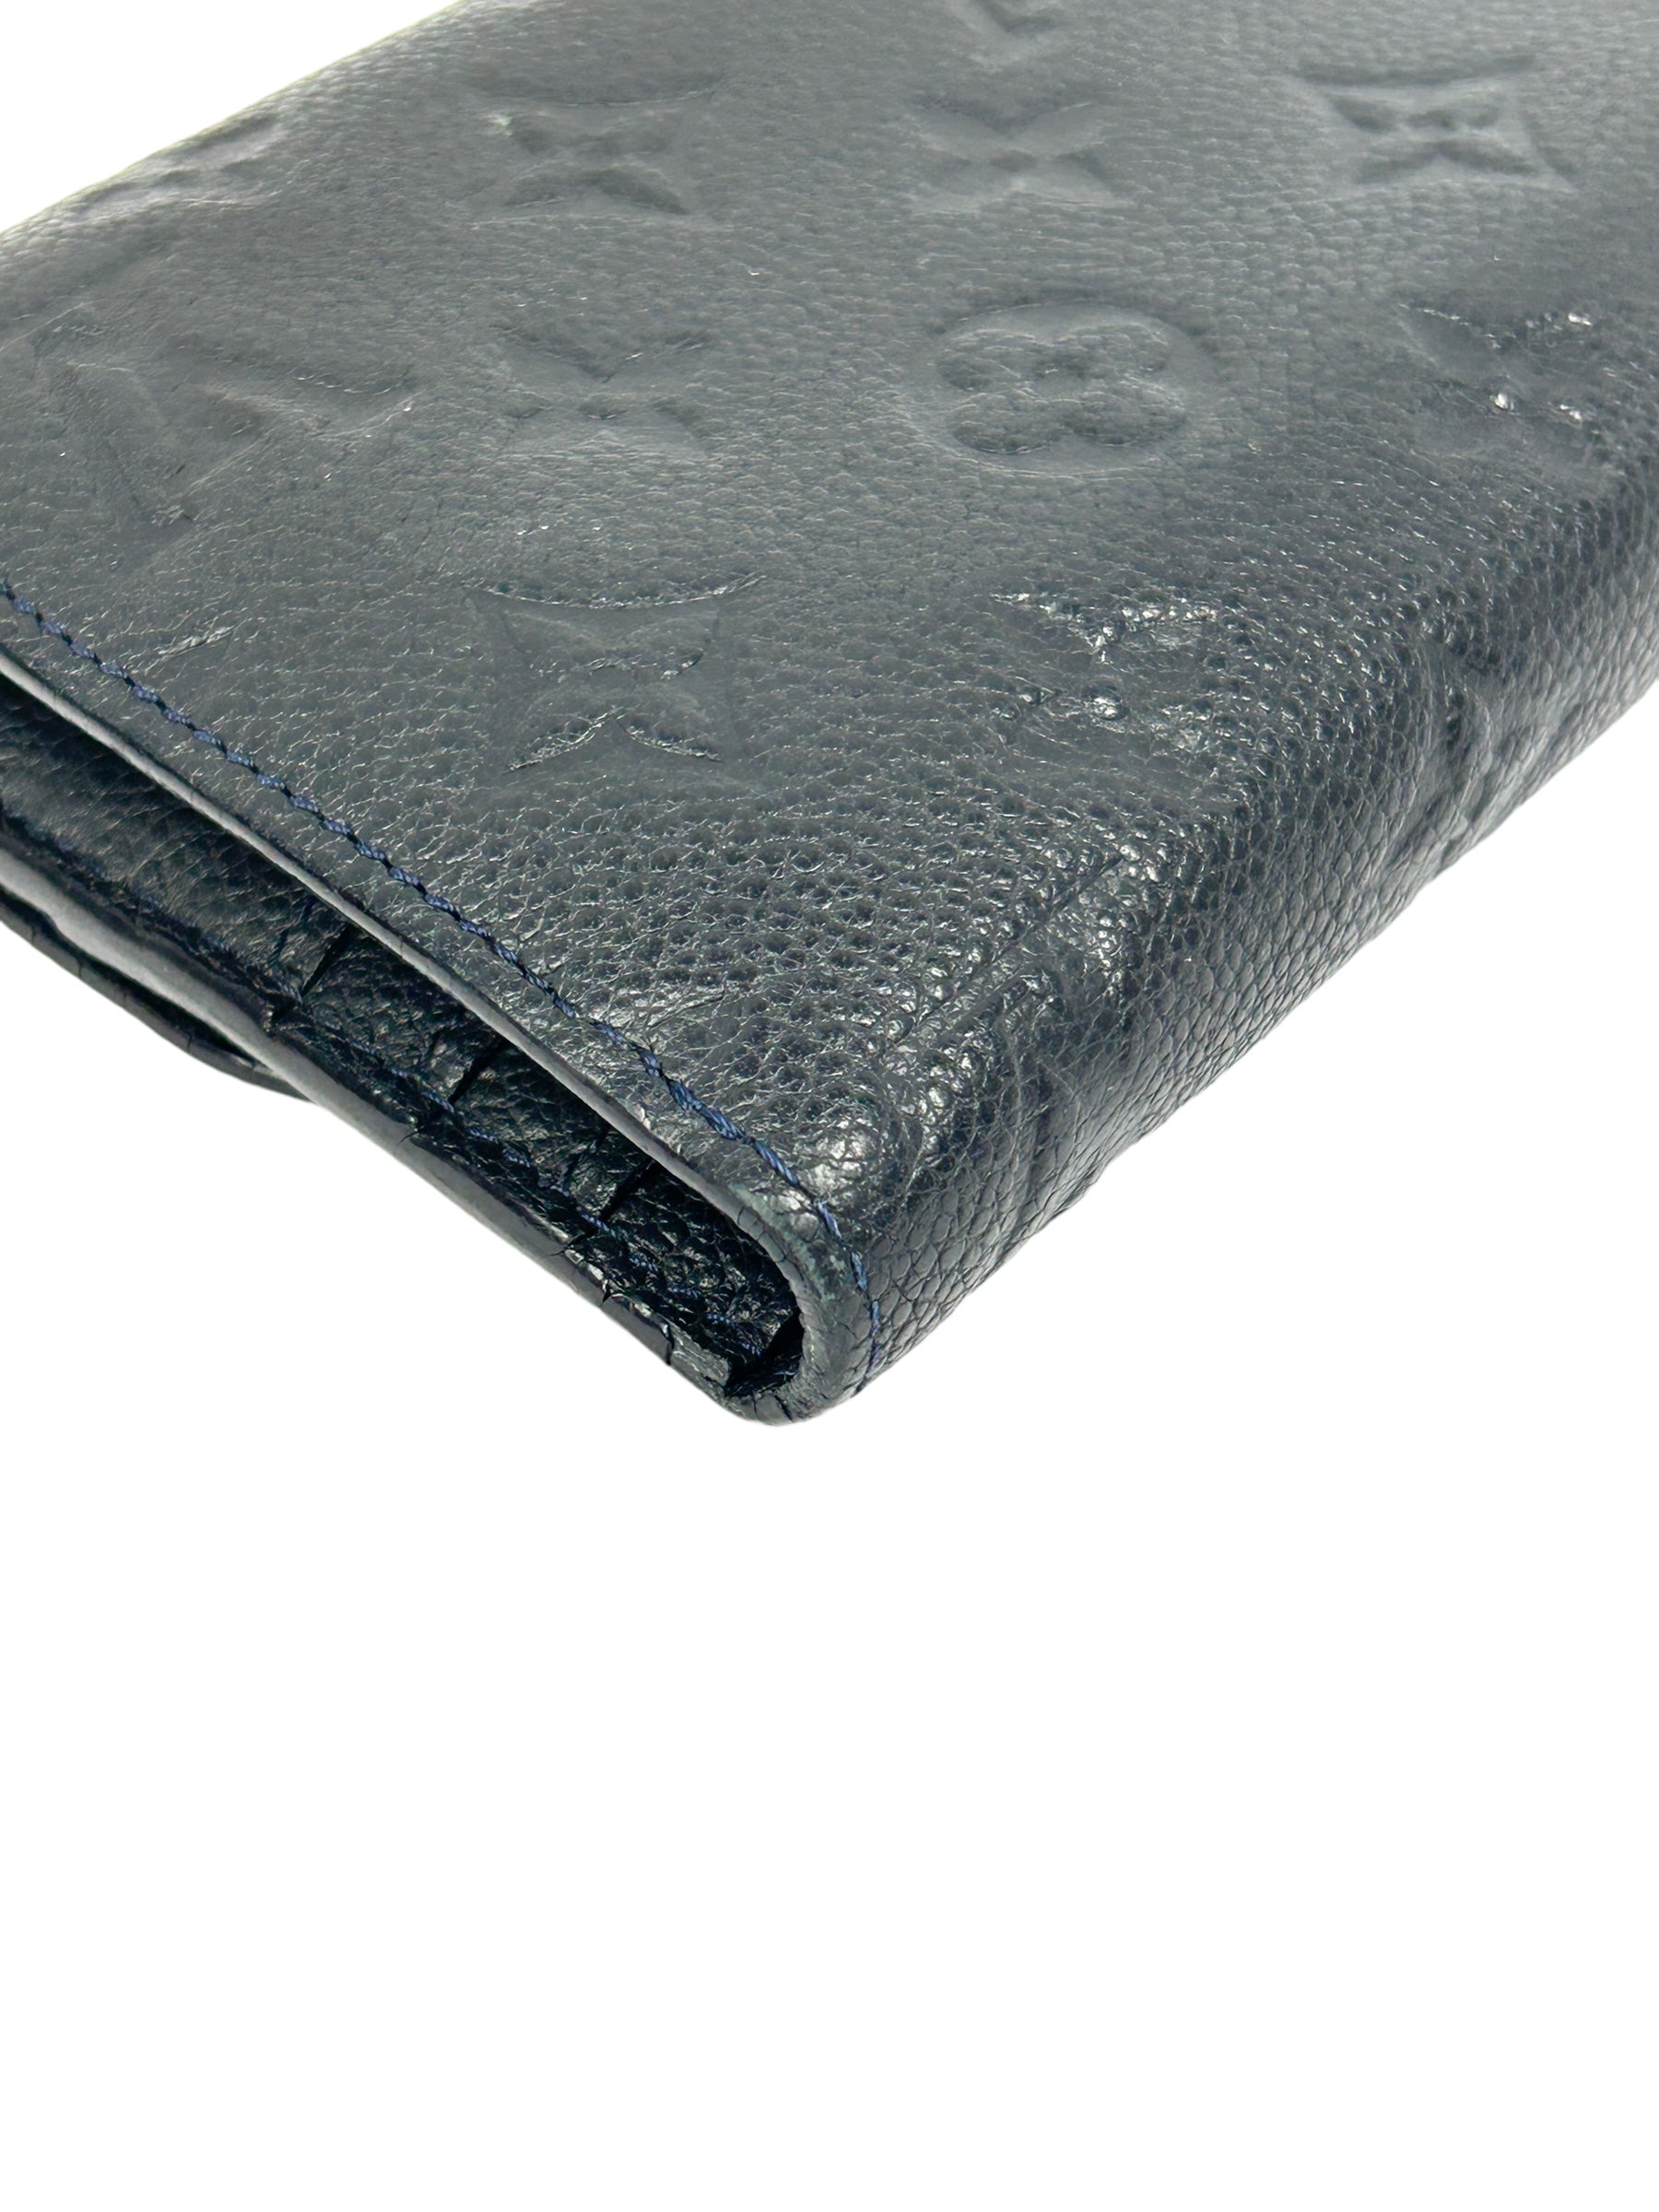 Black Empreinte Long Virtoise Trifold Calfskin Leather Wallet